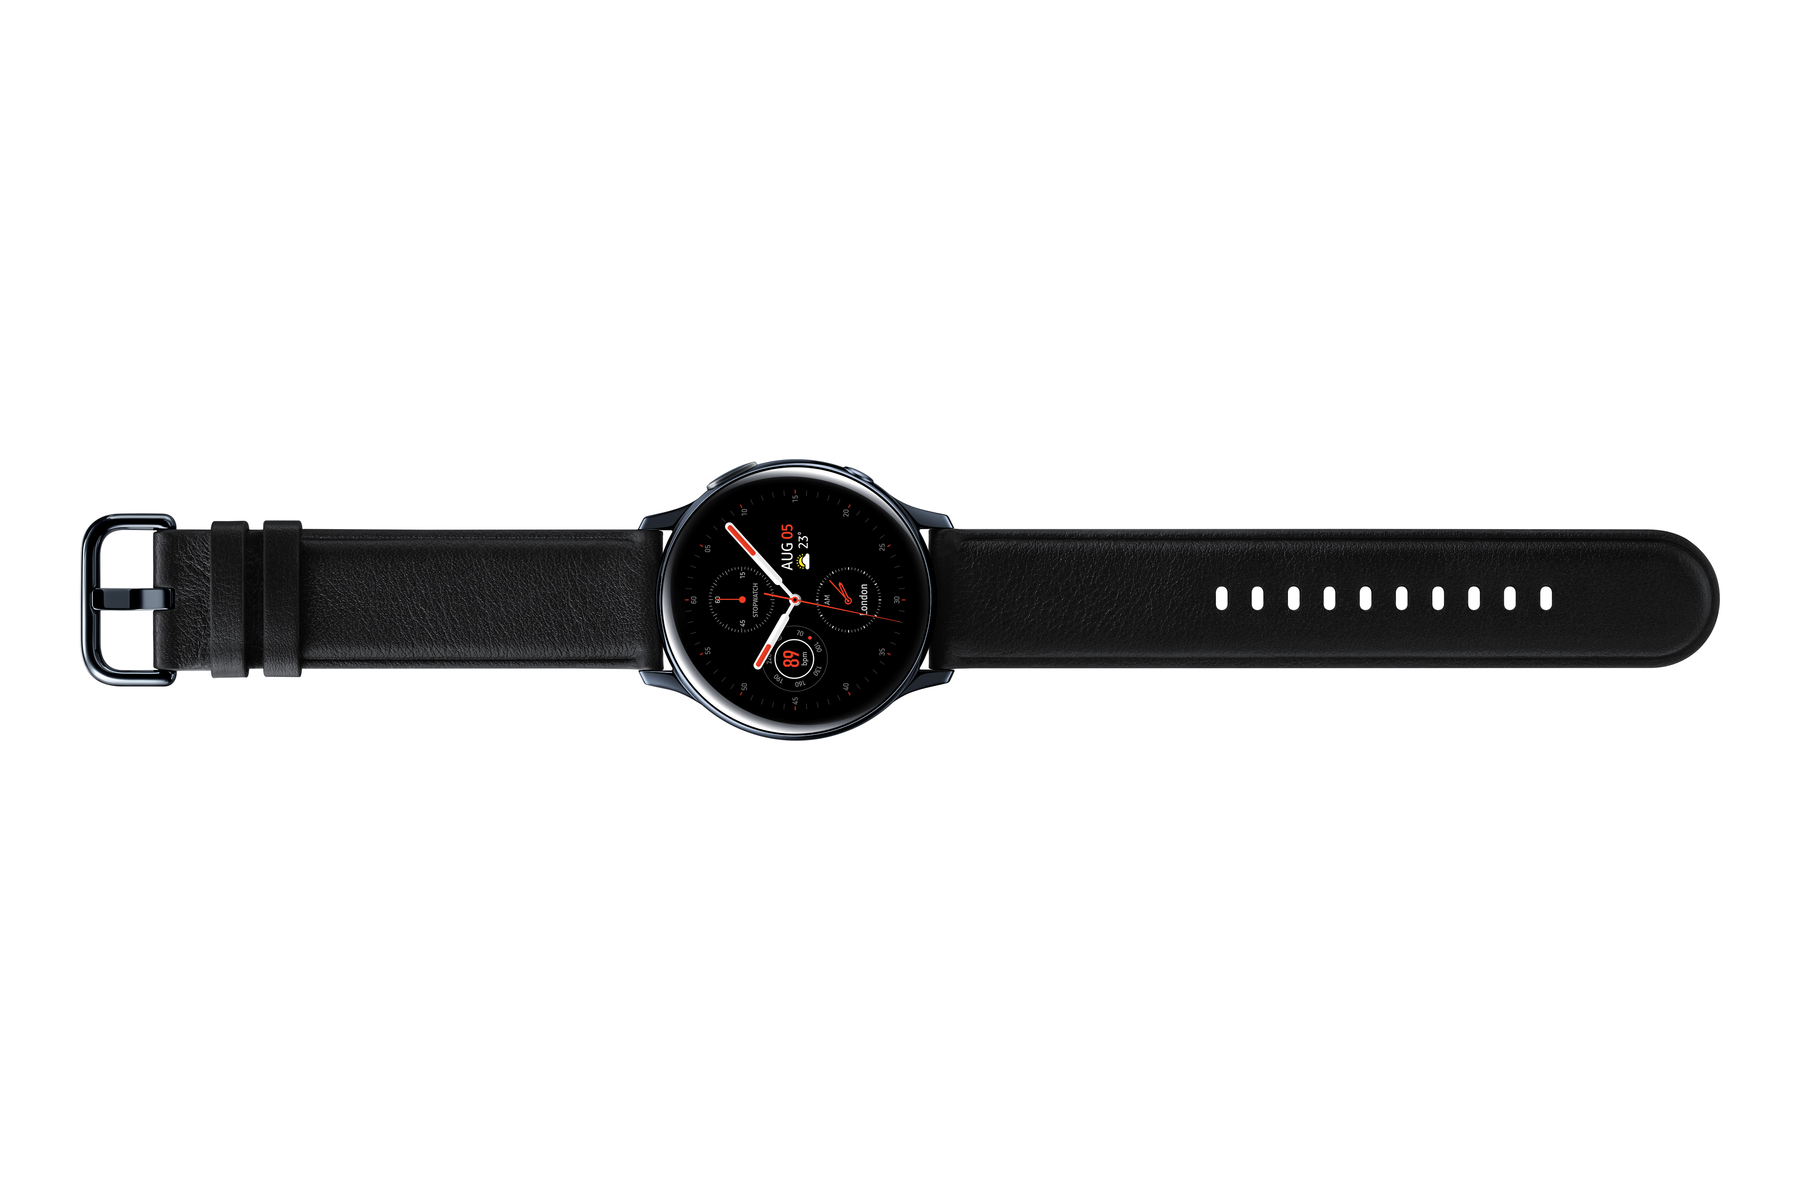 Watch Active 2 SAMSUNG Galaxy Silikon, Smartwatch schwarz